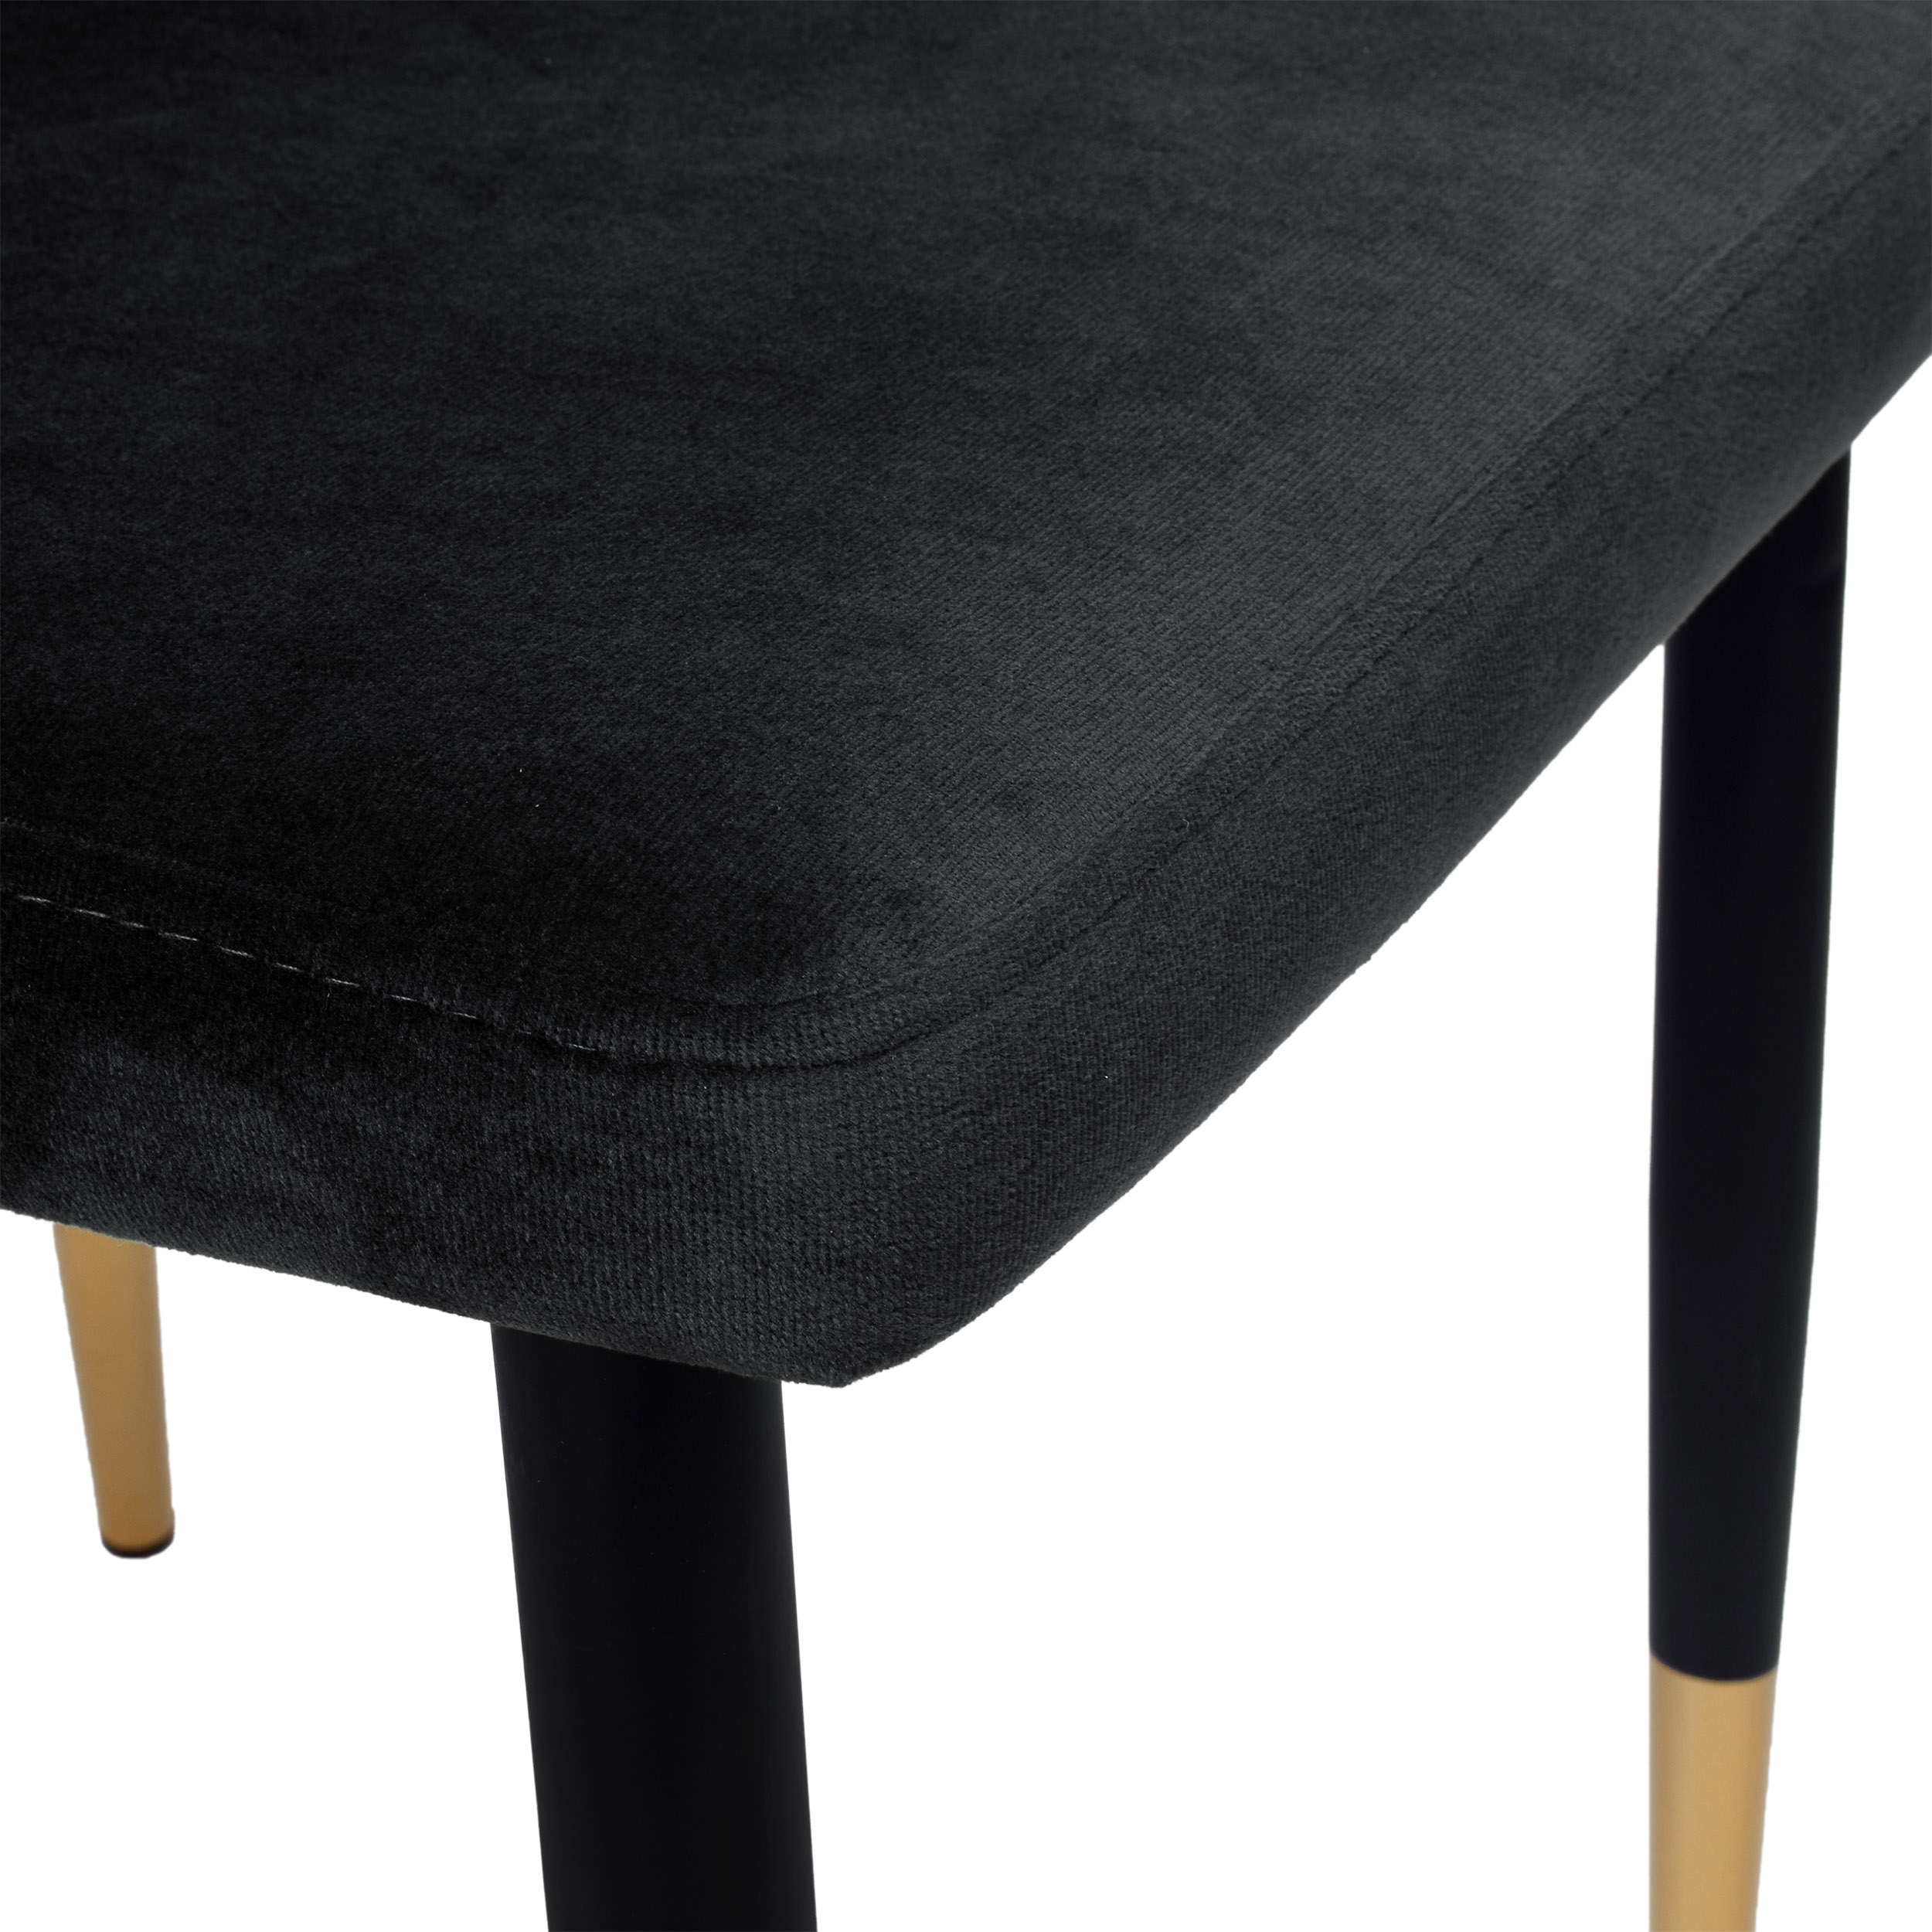 Krzesło welurowe VERMONT VELVET detal aksamit welur tapicerka